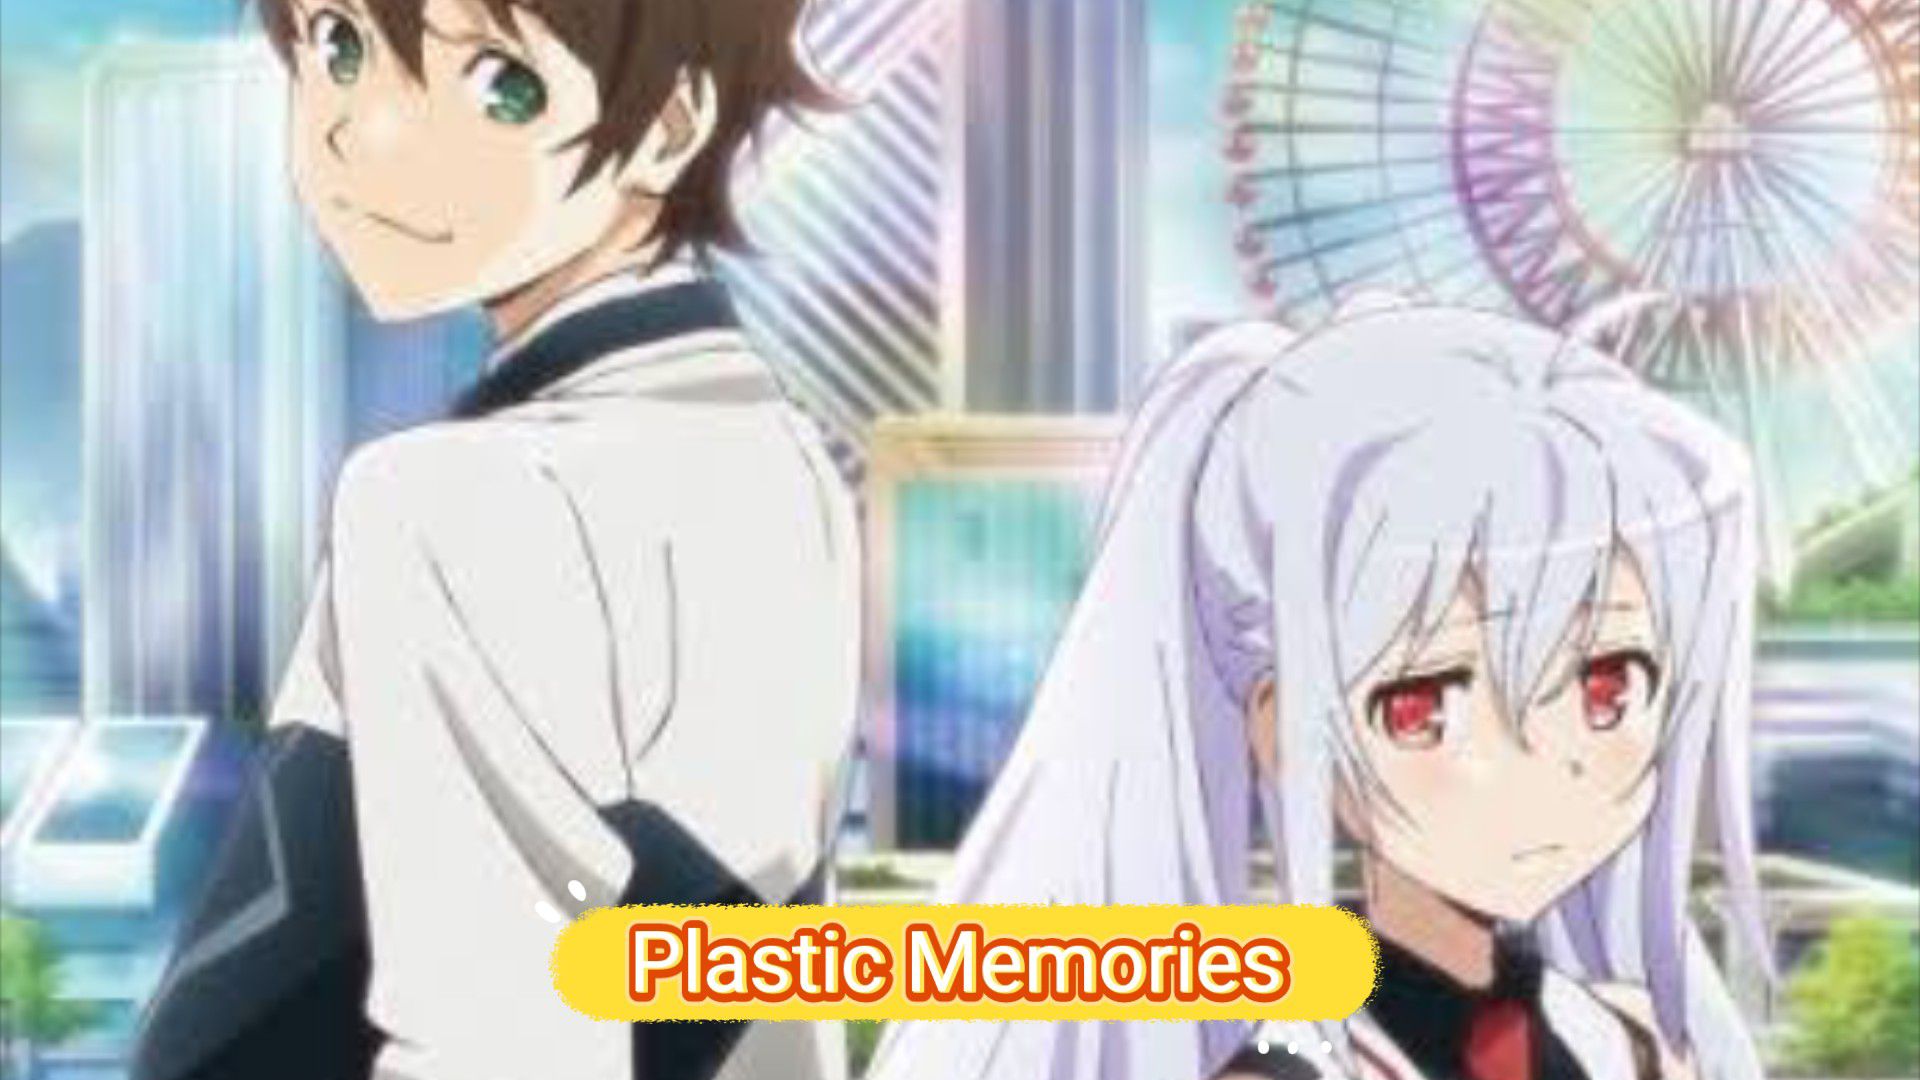 Watch Plastic Memories season 1 episode 13 streaming online